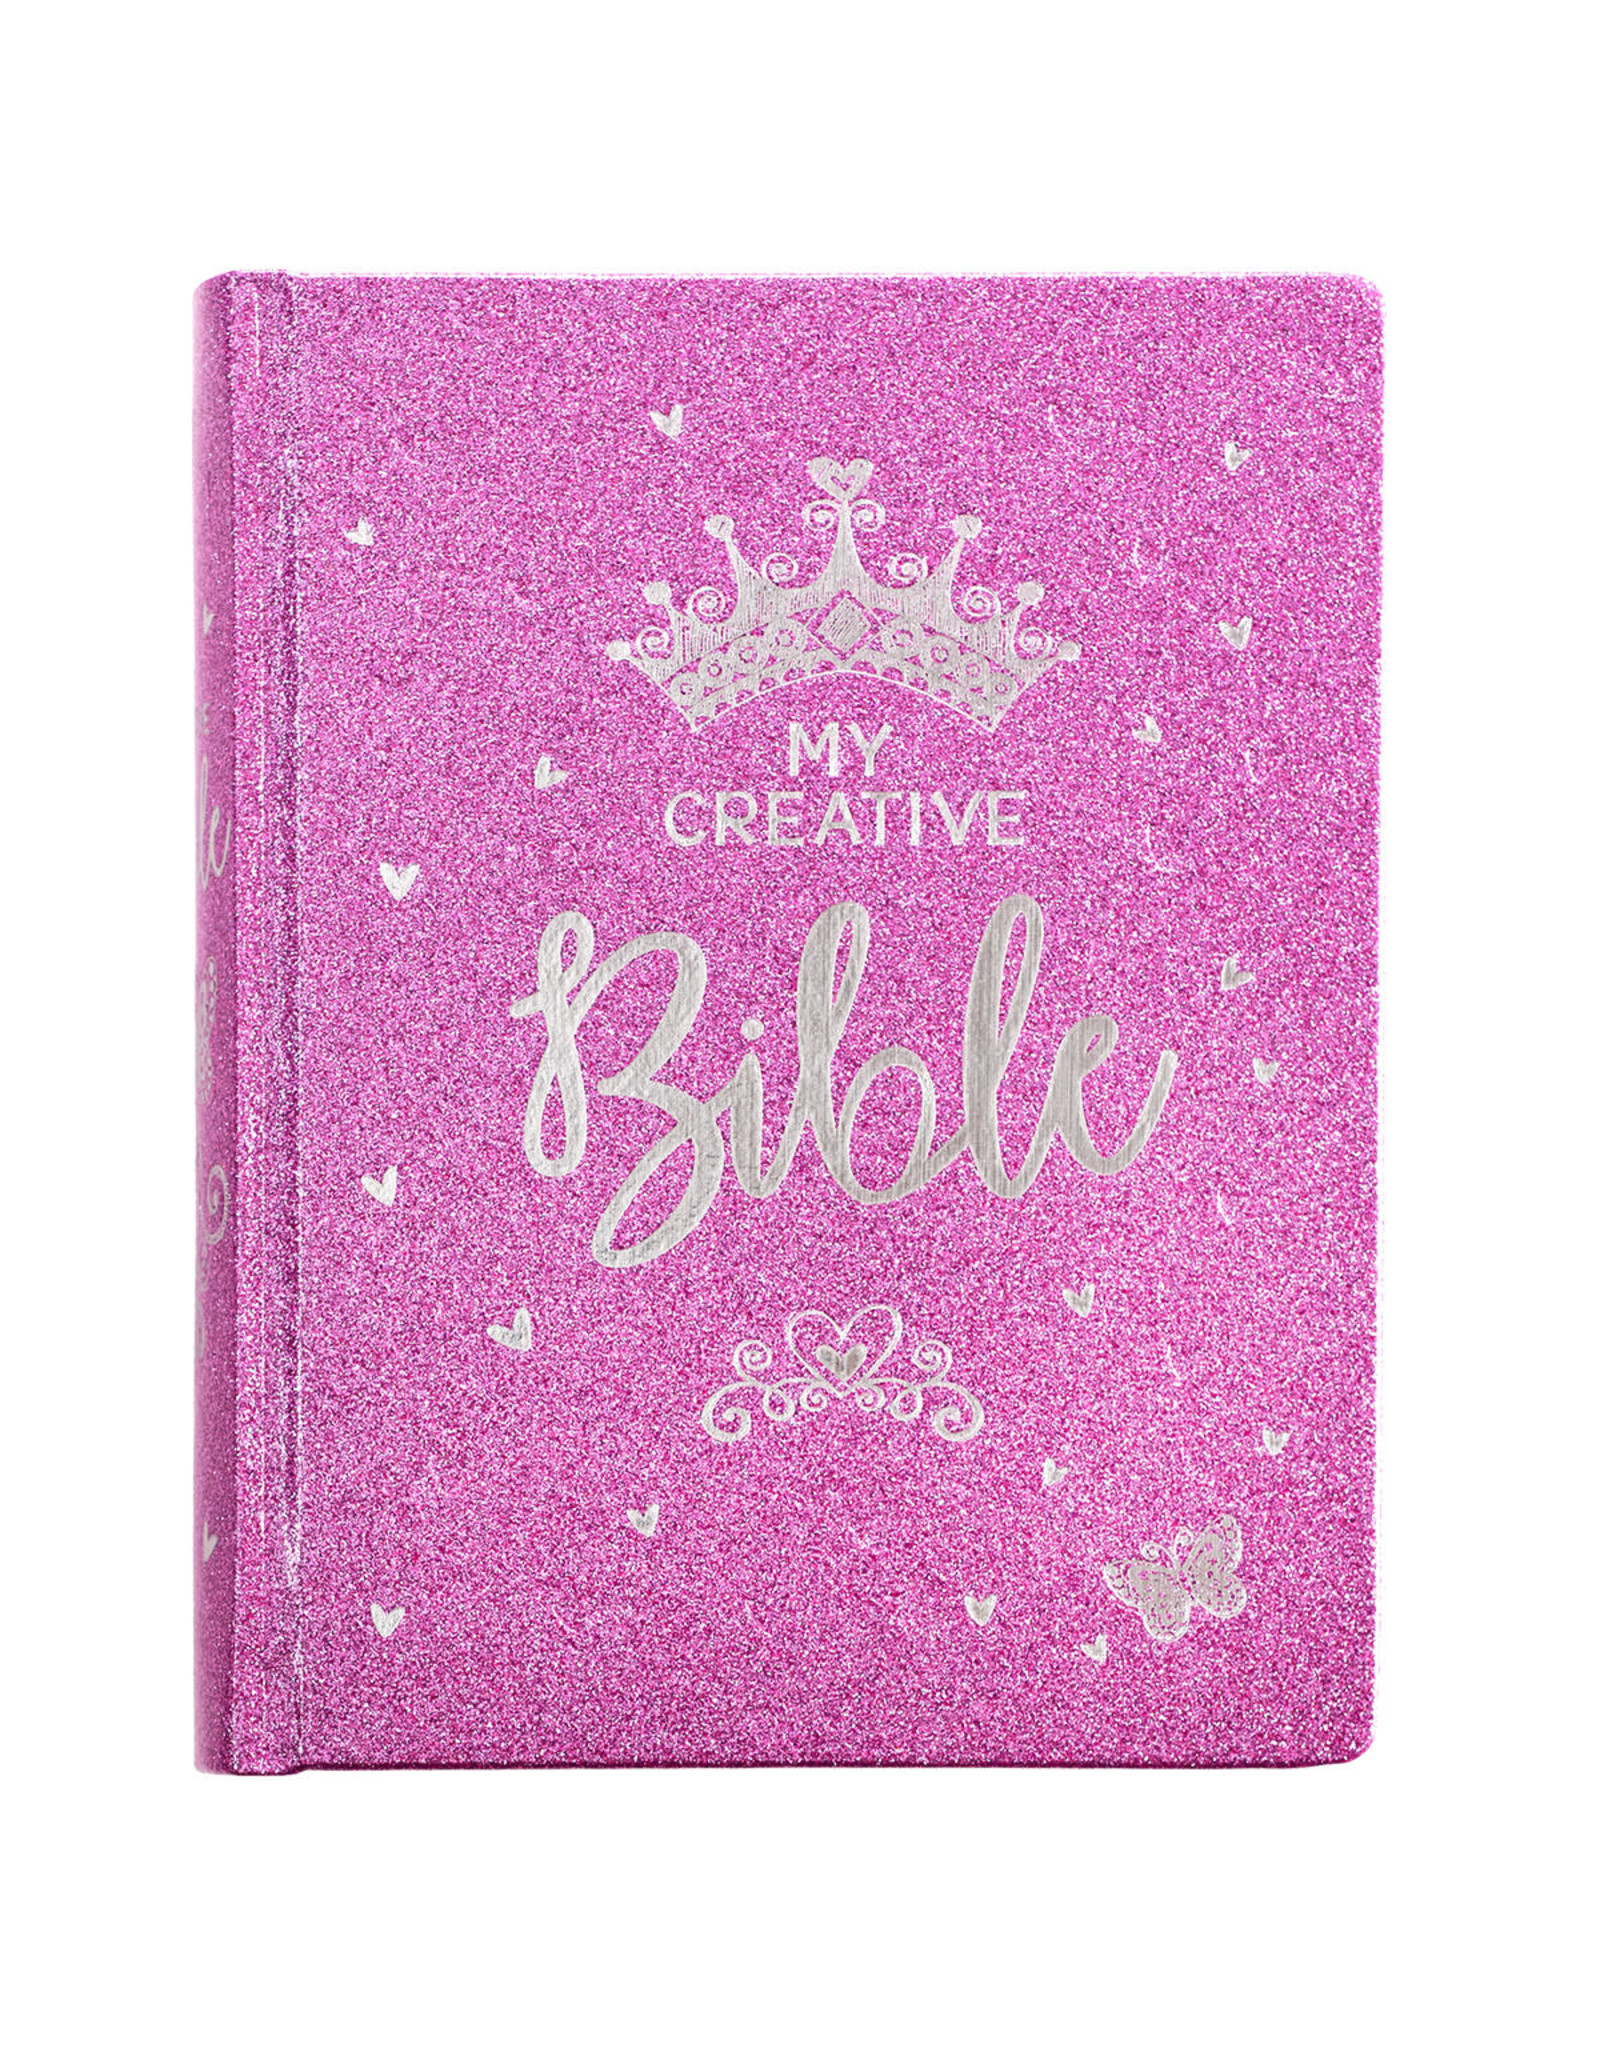 Purple Glitter My Creative Bible for Girls - ESV Journaling Bible